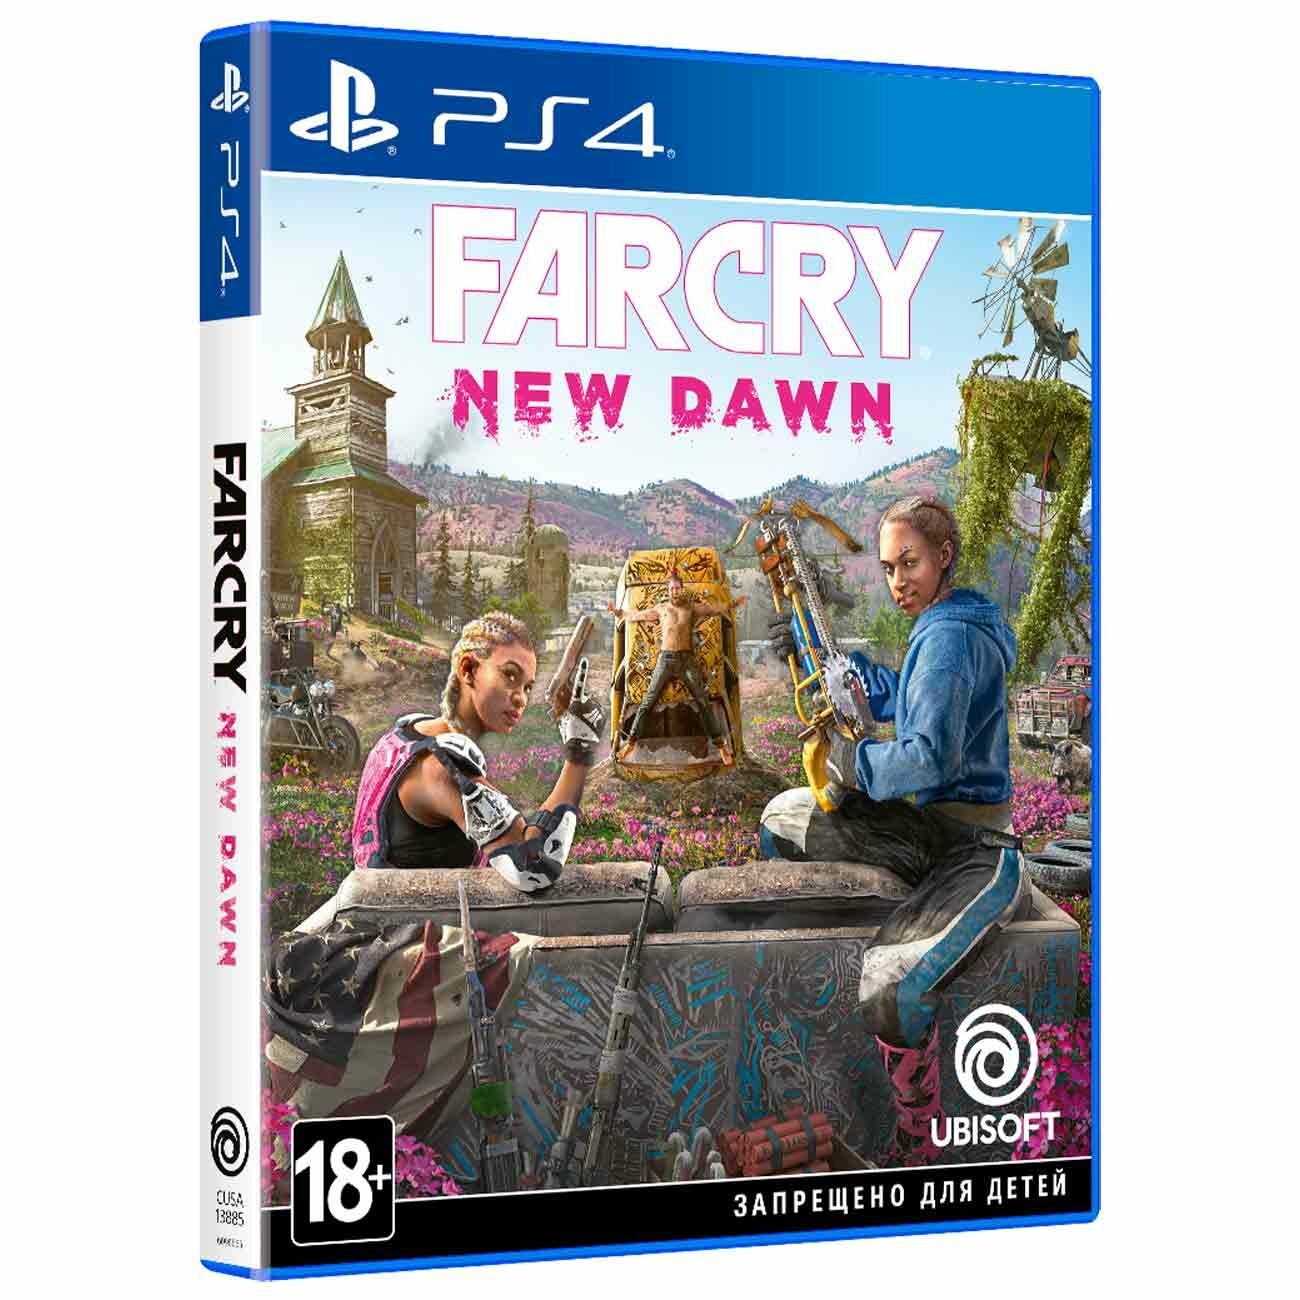 PS4 игра Ubisoft Far Cry New Dawn